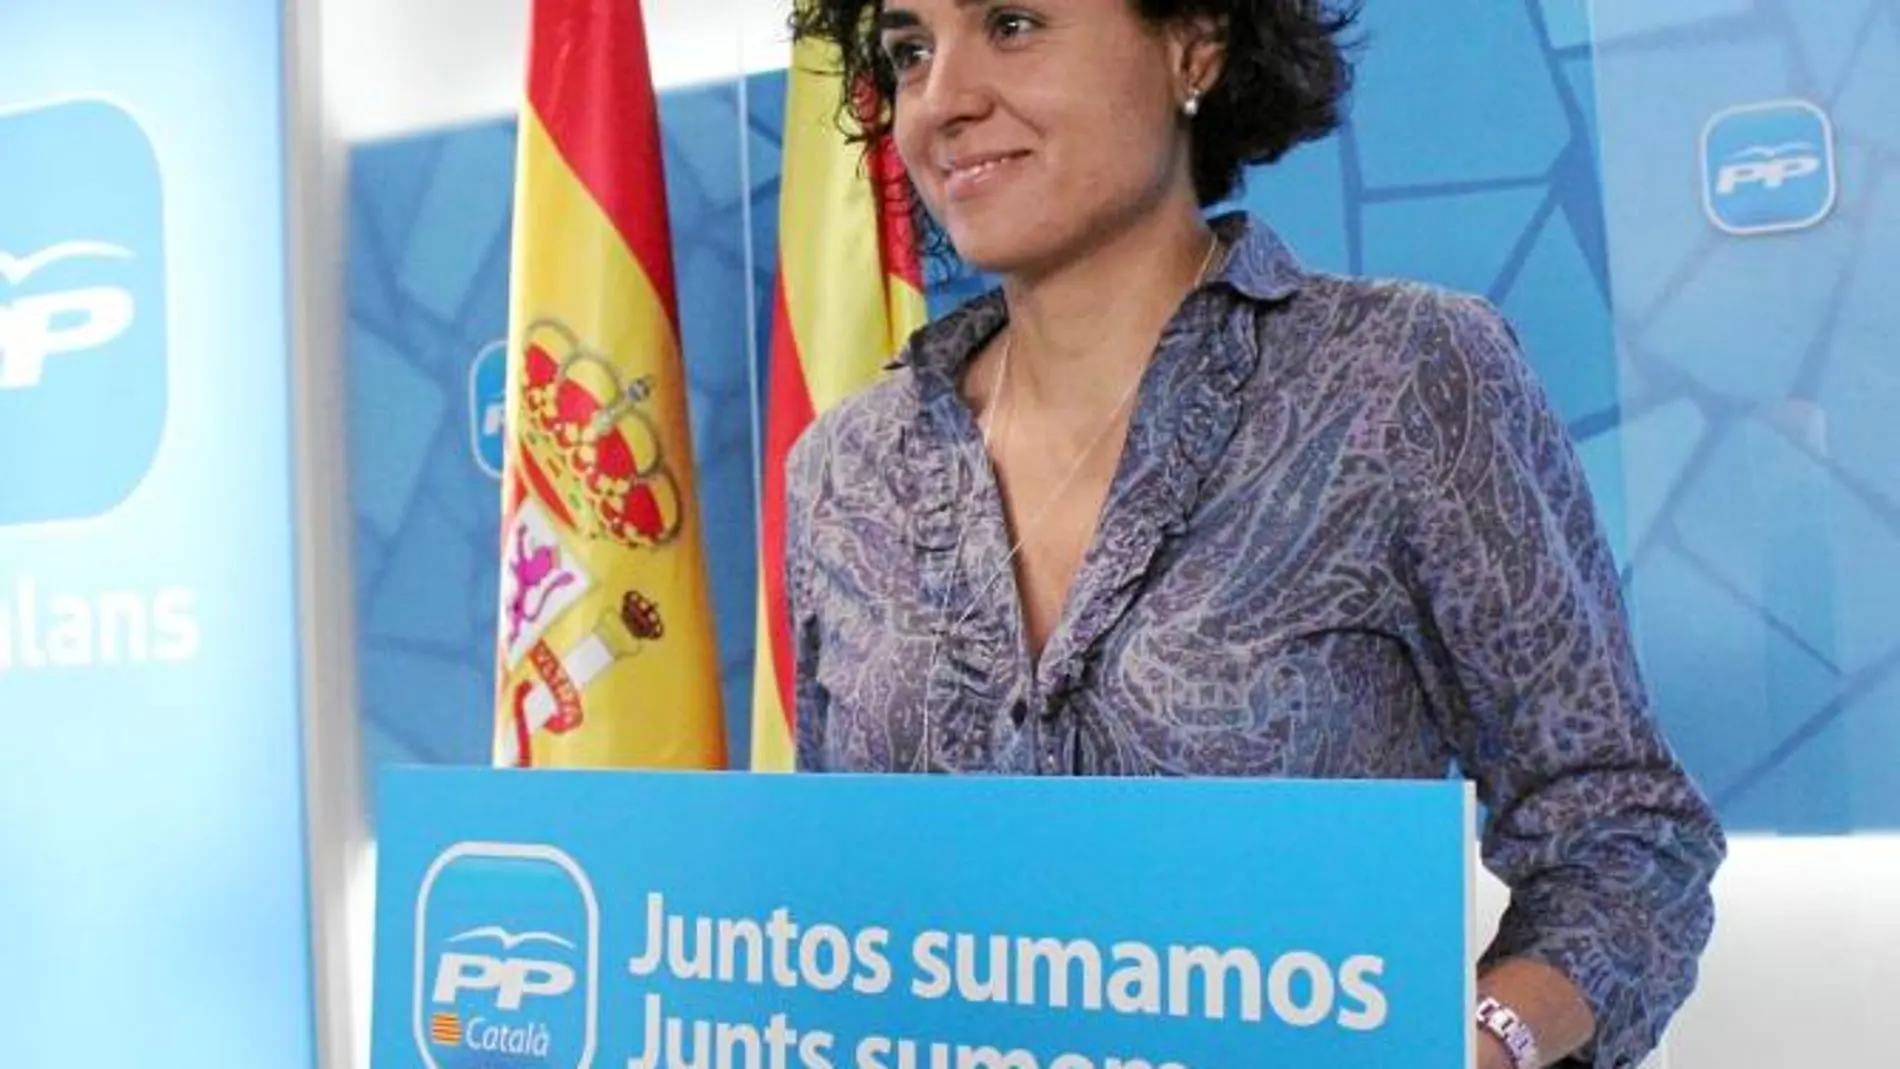 La coordinadora de la campaña del PP, Dolors Montserrat